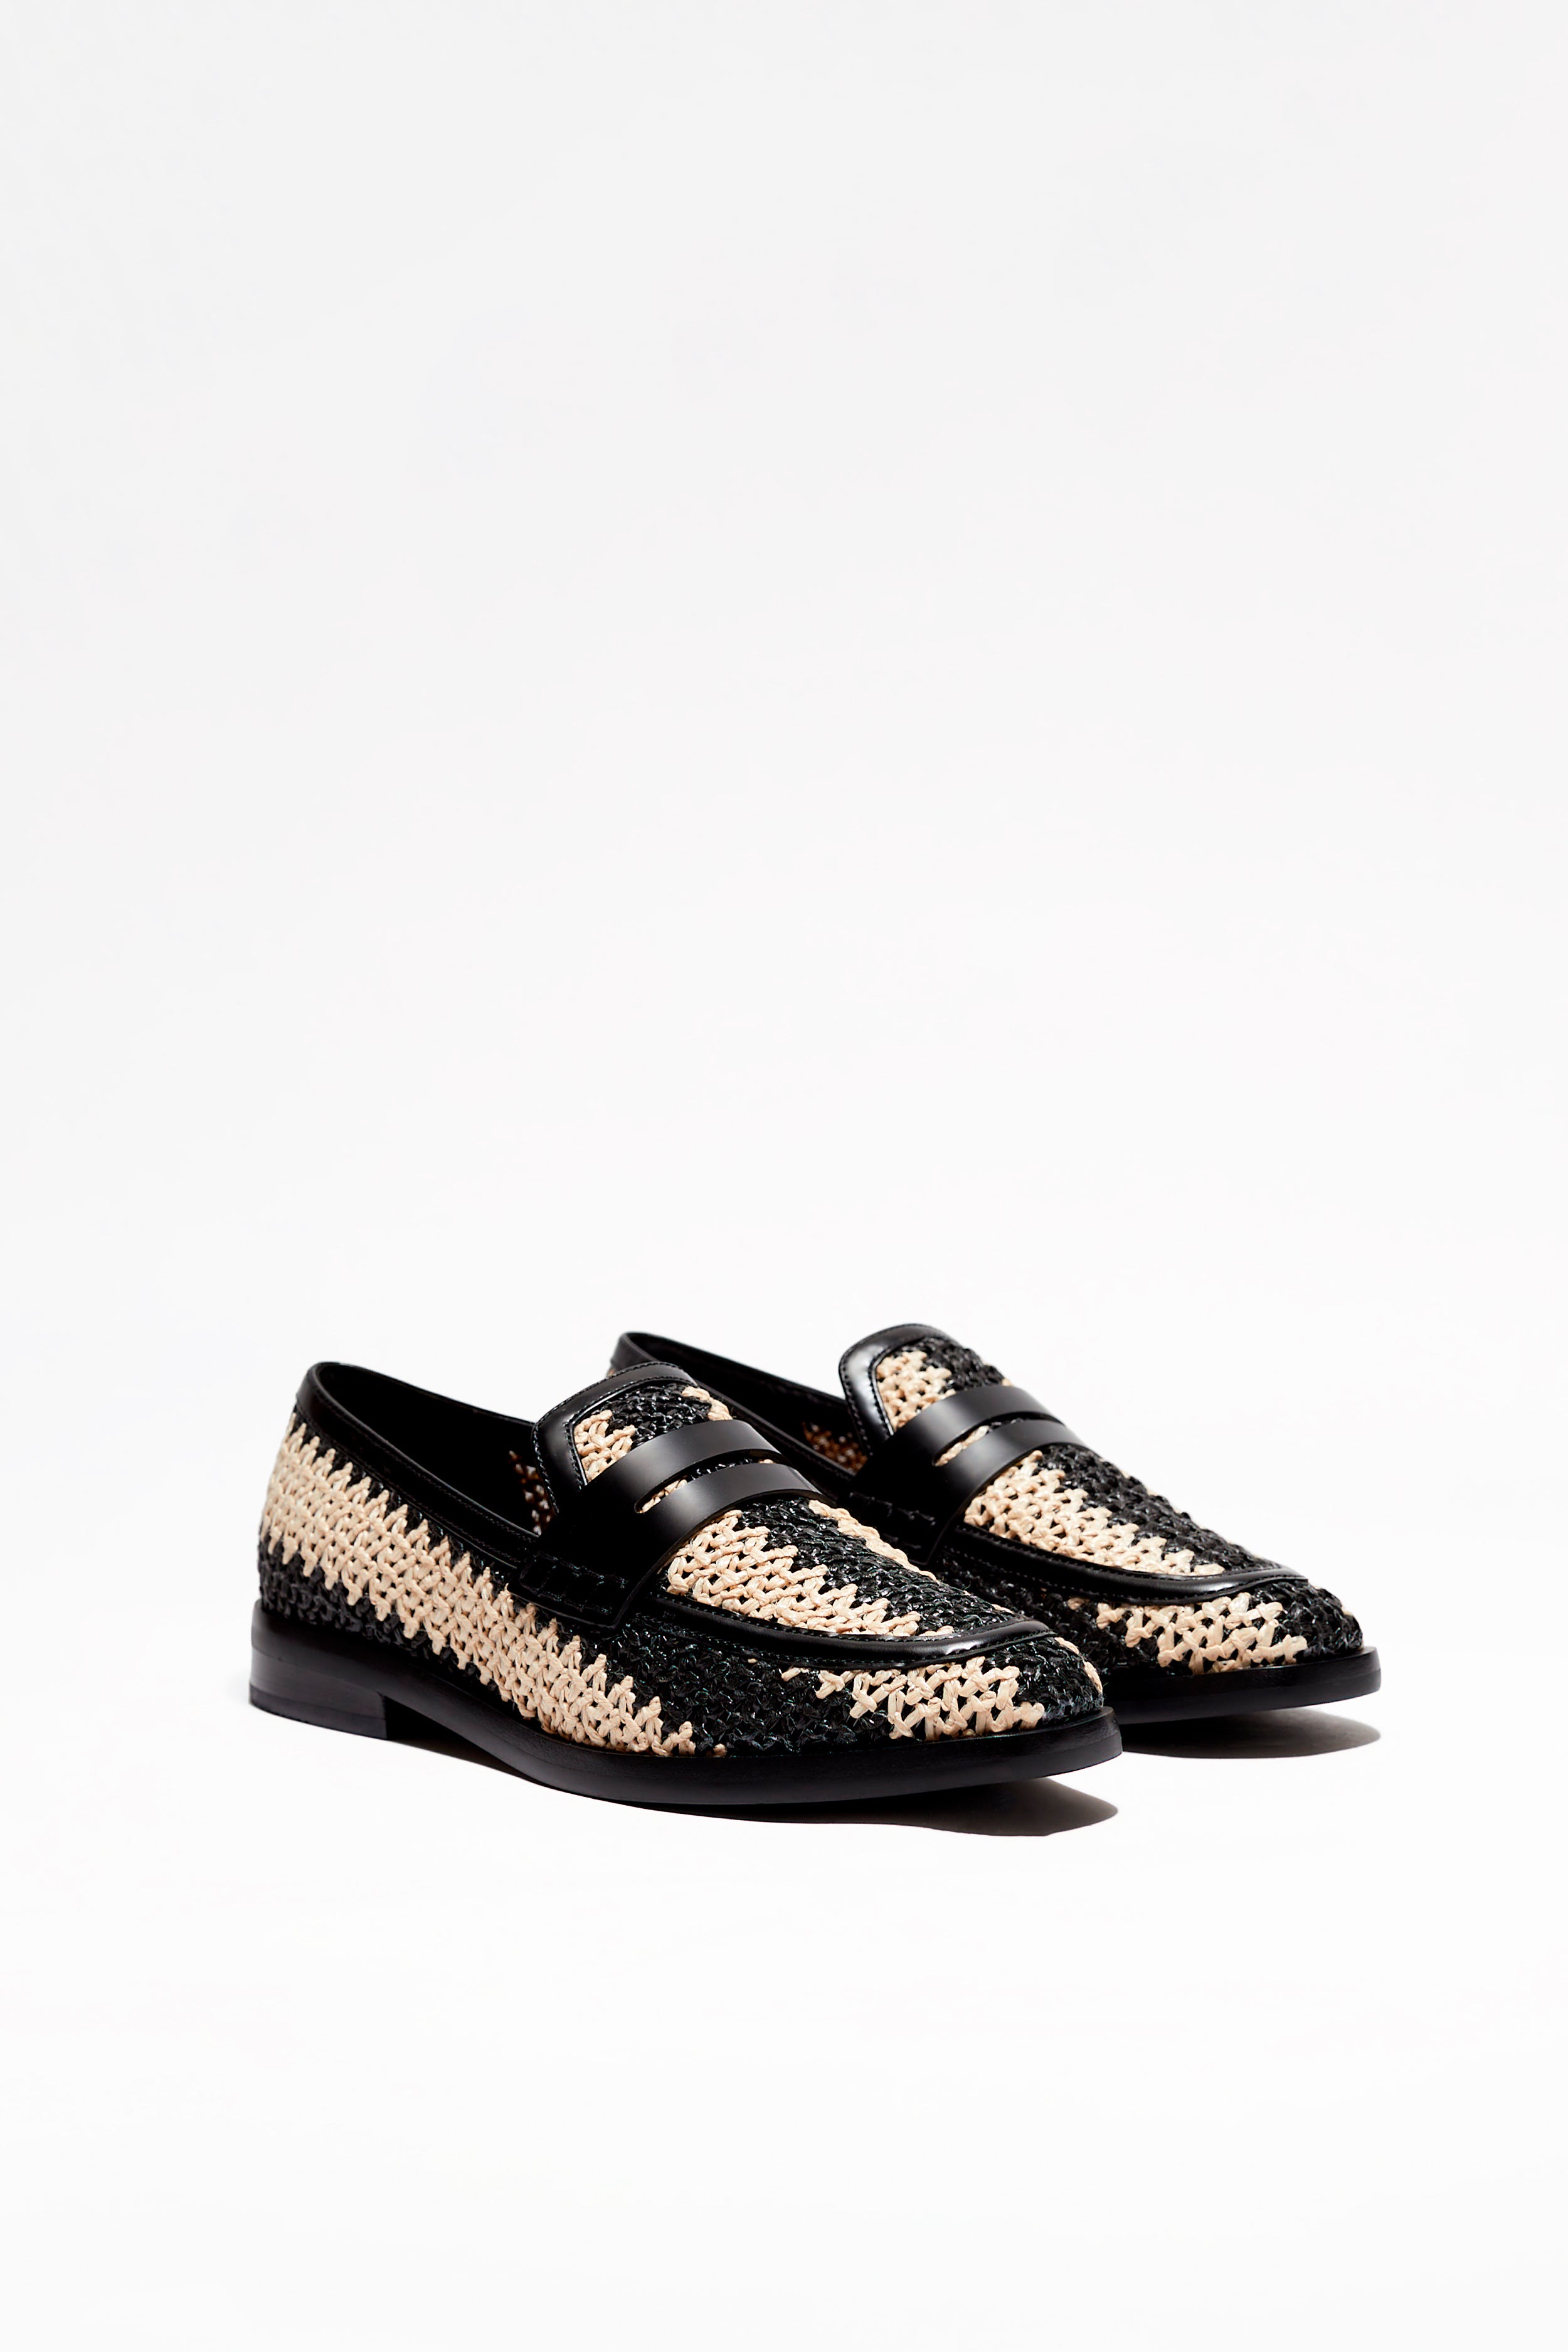 Women's Designer Shoes - Flats u0026 Loafers | 3.1 Phillip Lim